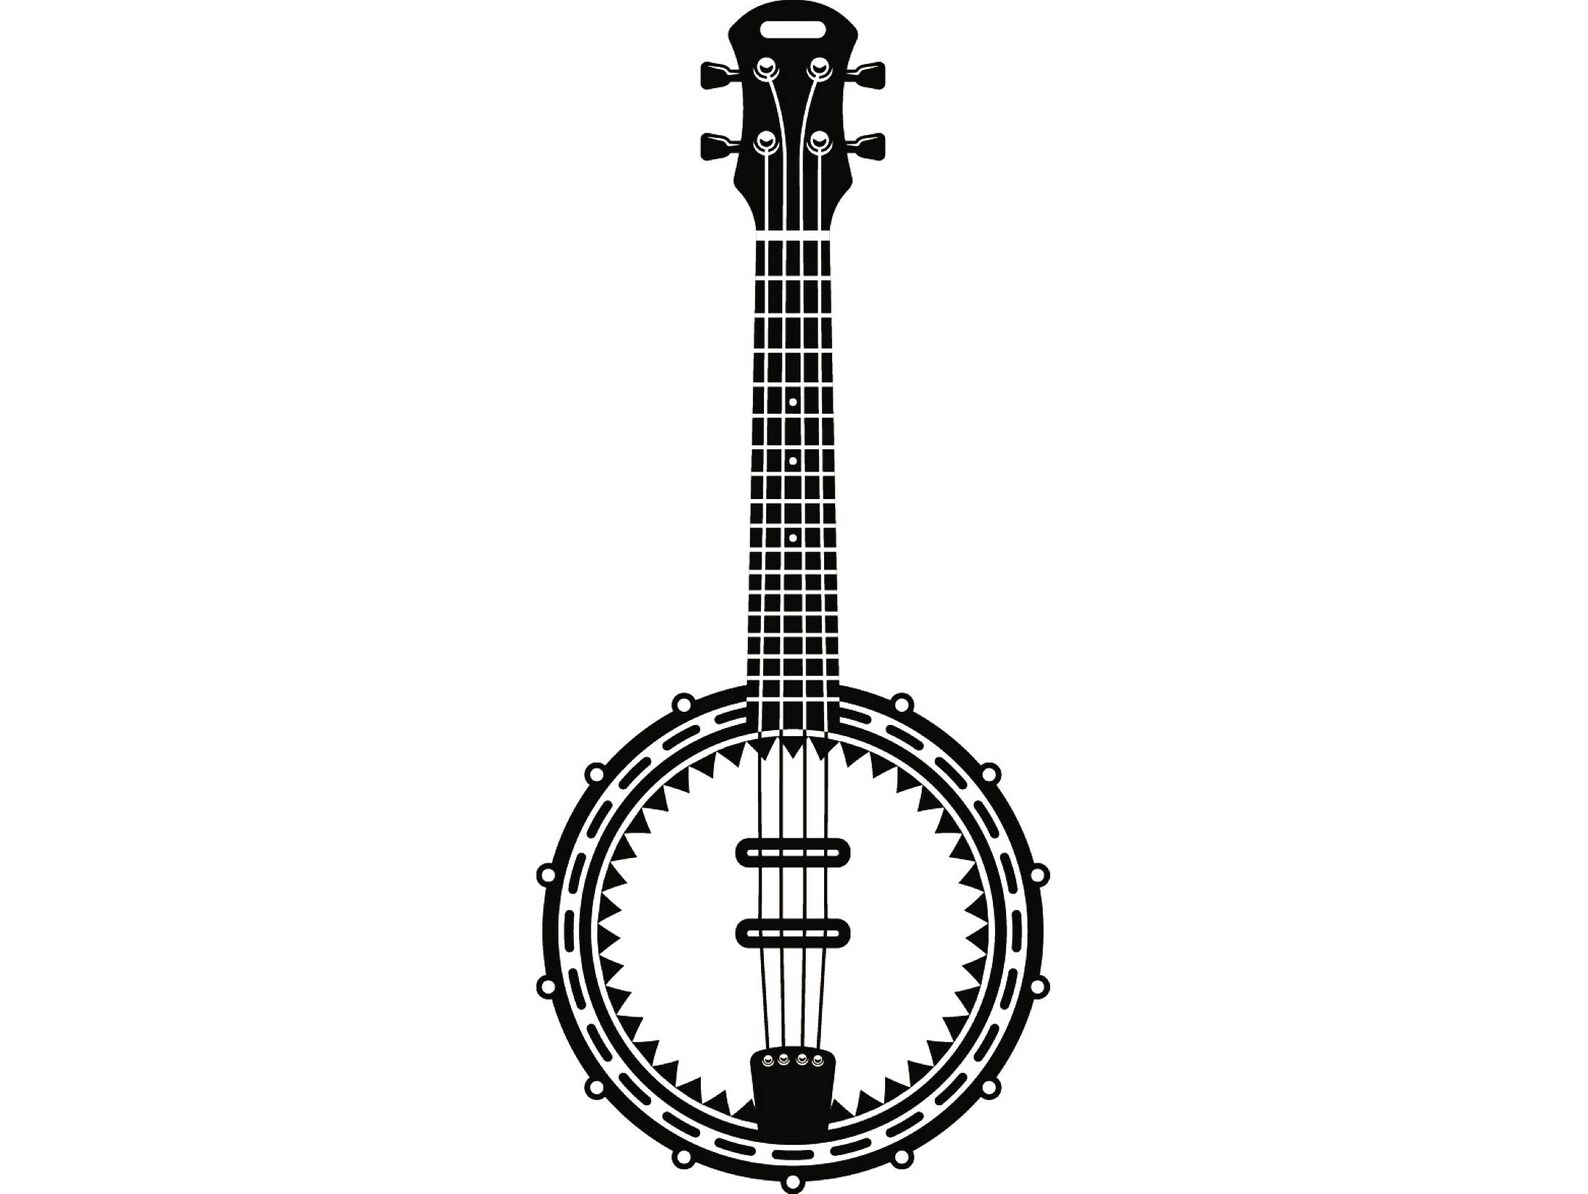 Banjo 1 Musical Instrument Strings Rock Music Guitar Country image 0.